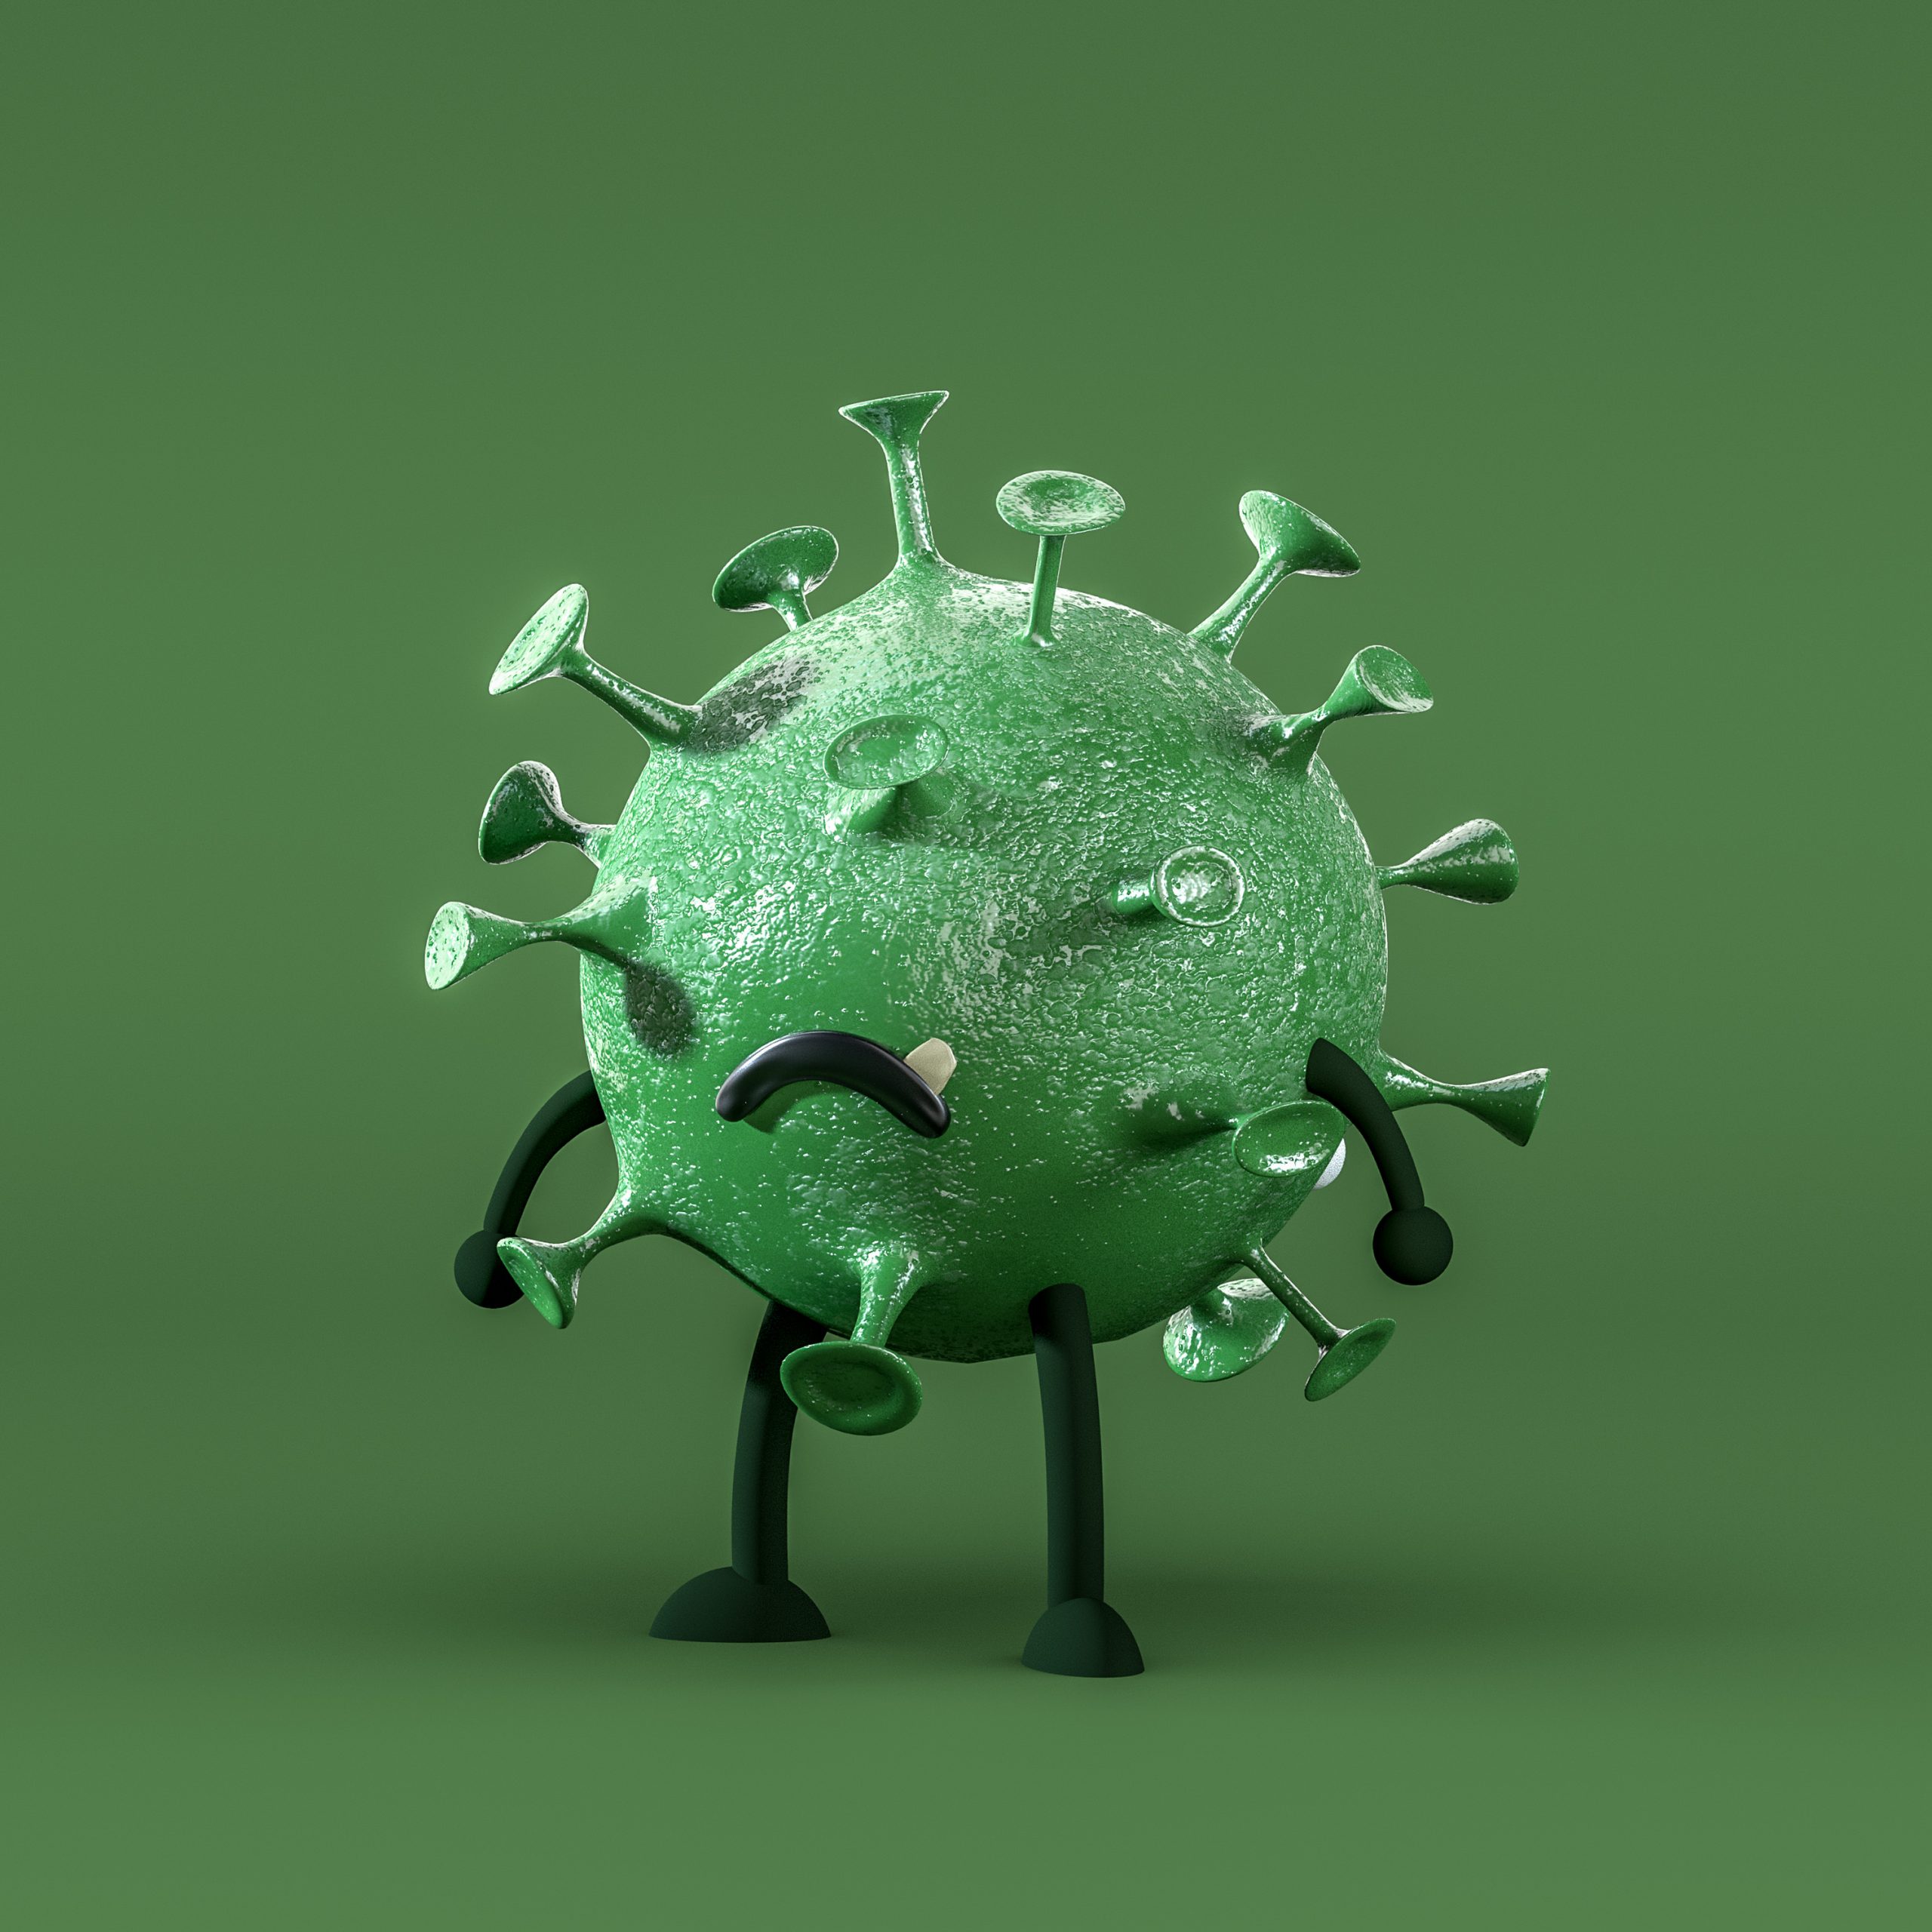 Картинки про вируса. Бактерия Covid-19. Вирус. Смешной вирус. Вирусы и бактерии для детей.